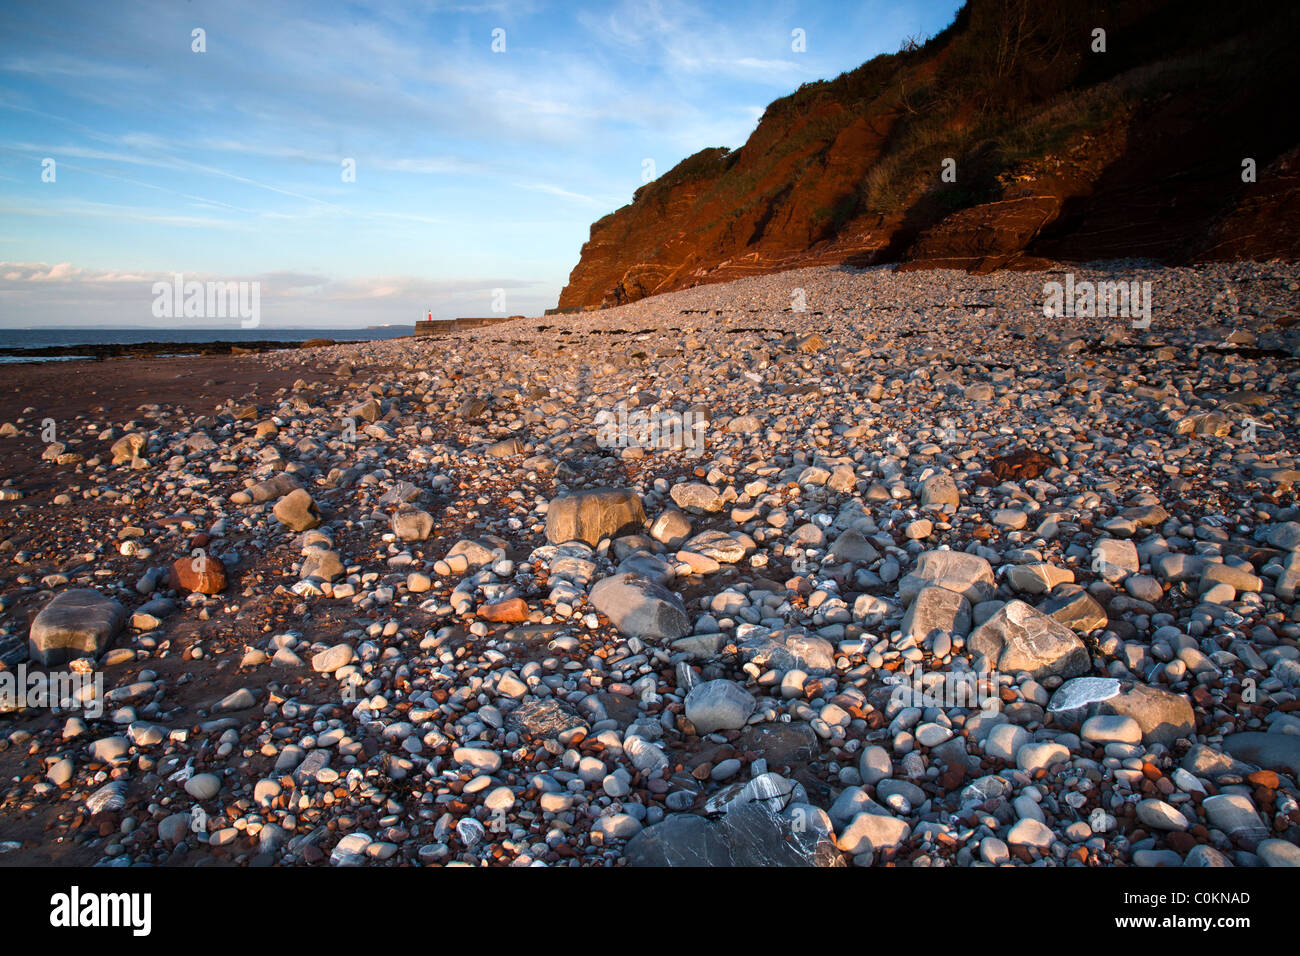 A view along the beach at Watchett, Somerset, UK at sunset Stock Photo